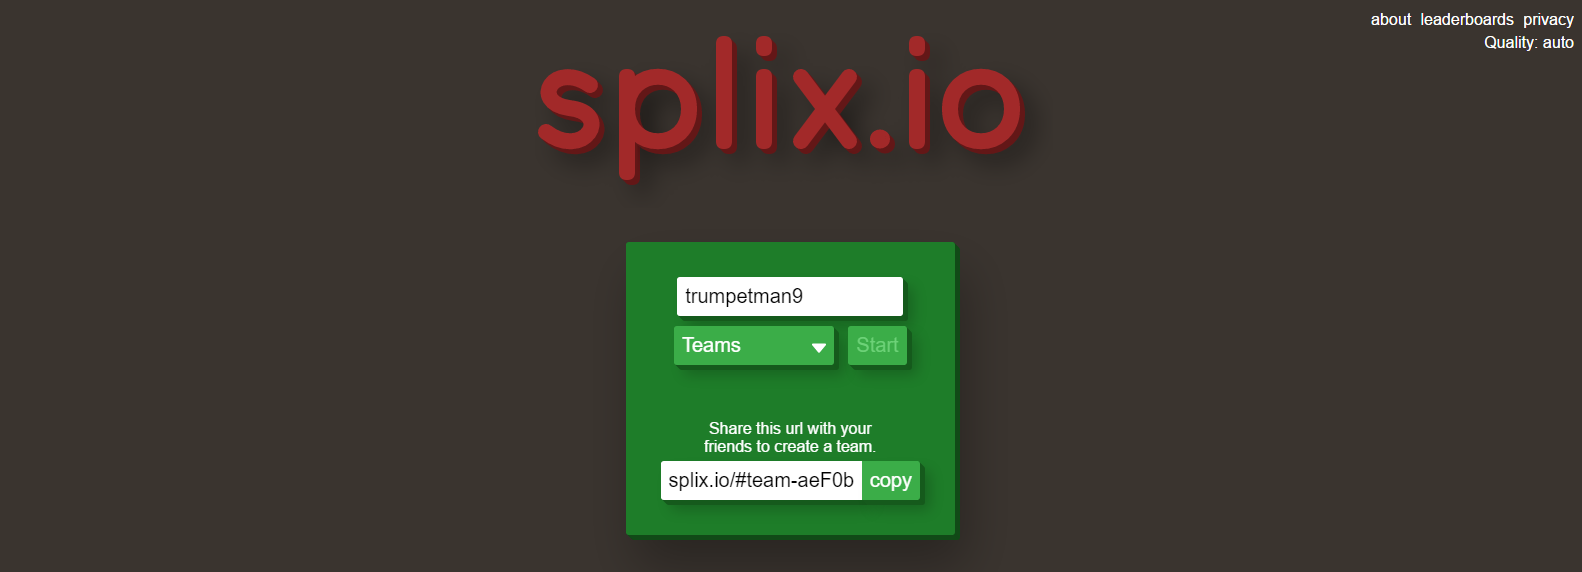 SPLIX.IO NEW TEAM MODE - SPLIXIO WITH YOUR FRIENDS 